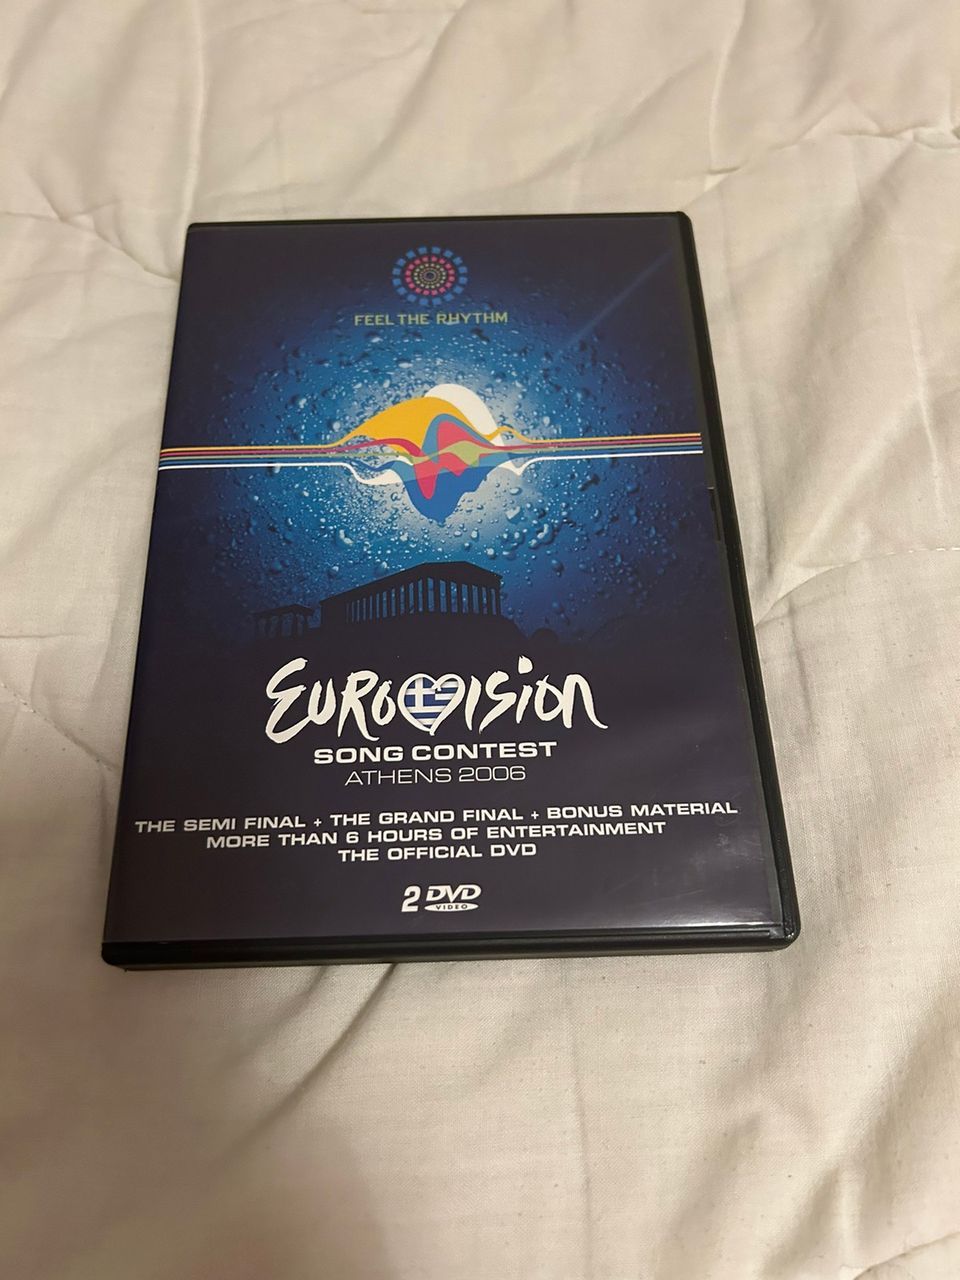 Eurovision Song Contest Athens 2006 DVD